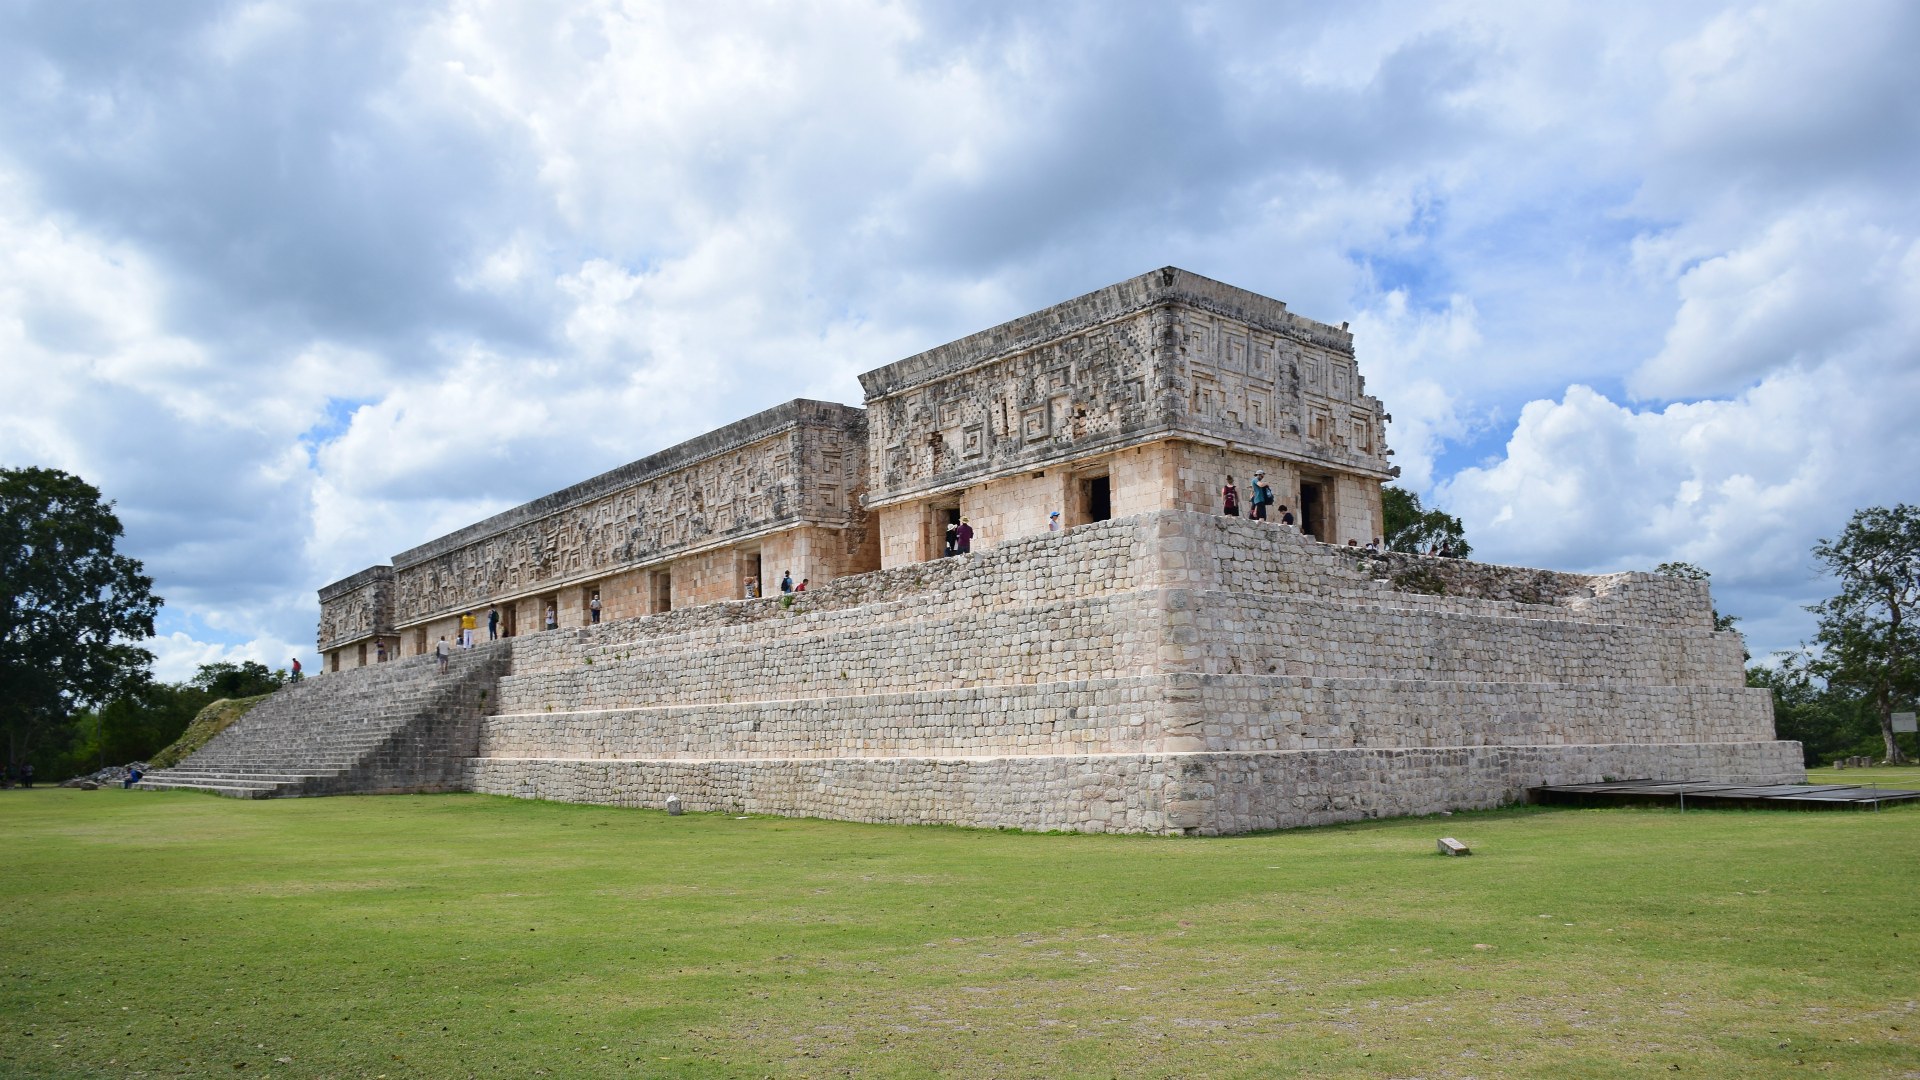 Governor's Palace, Uxmal, Mexico